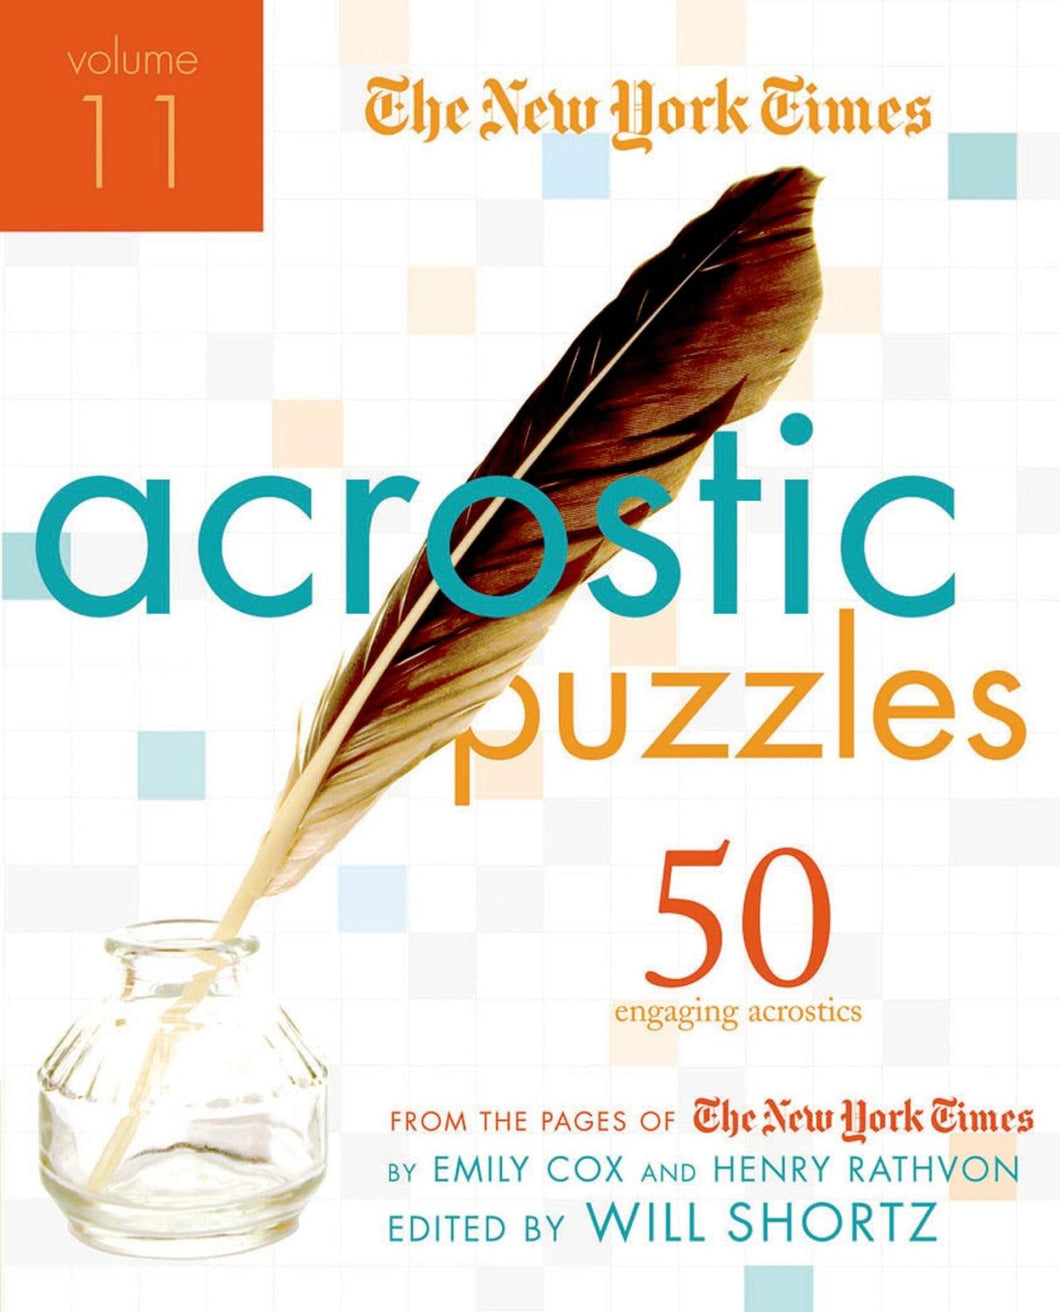 New York Times Acrostic Puzzles Volume 11